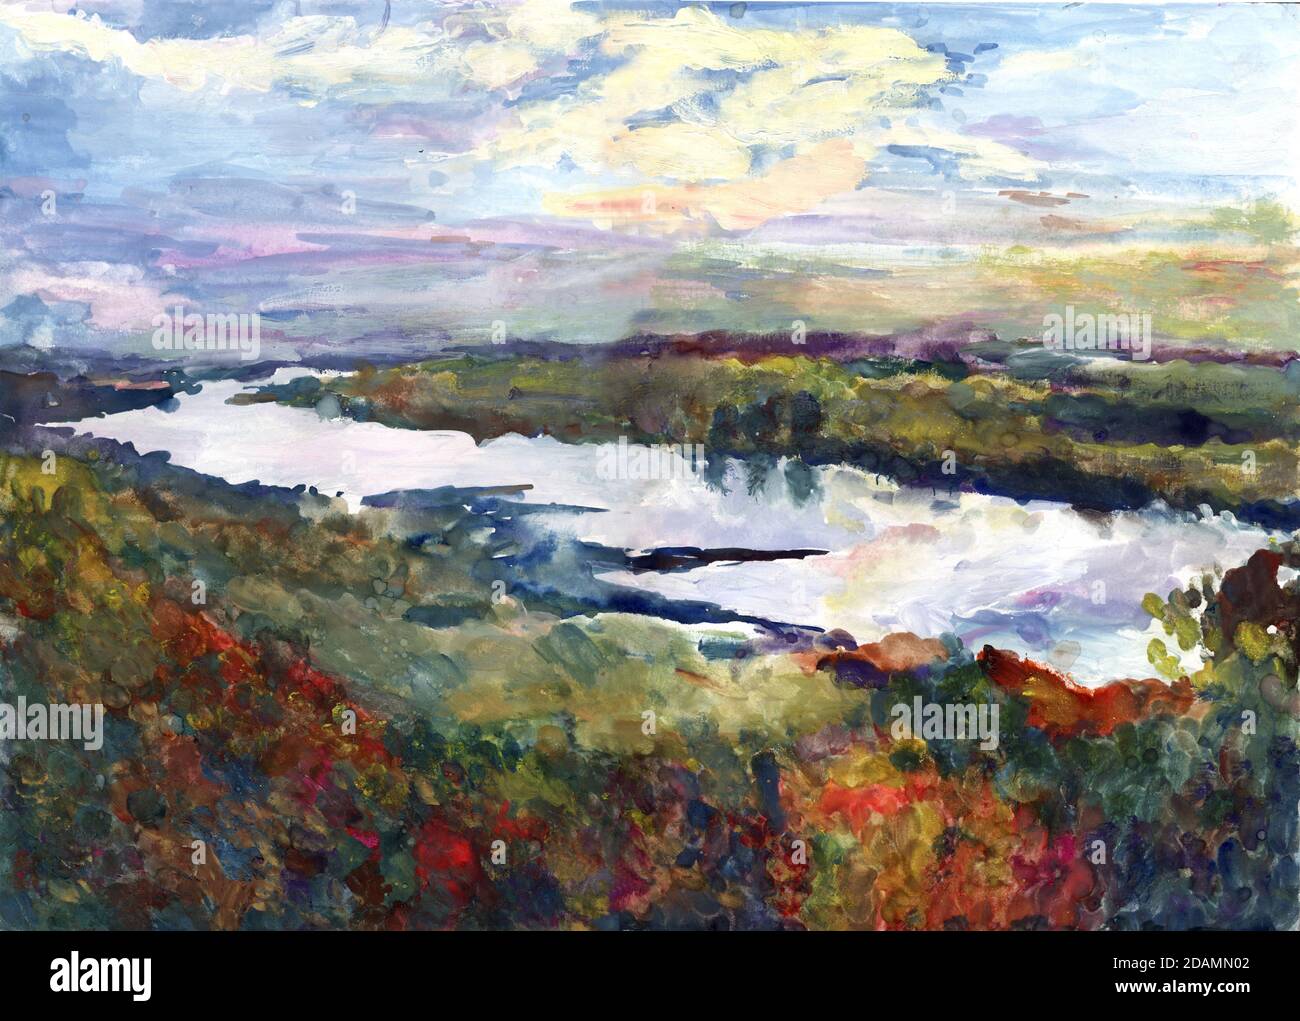 Fluss Landschaft Fluss Tom Russland Sibirien Gouache Malerei Sommer Sonnenuntergang Von Fingern hergestellt Stockfoto